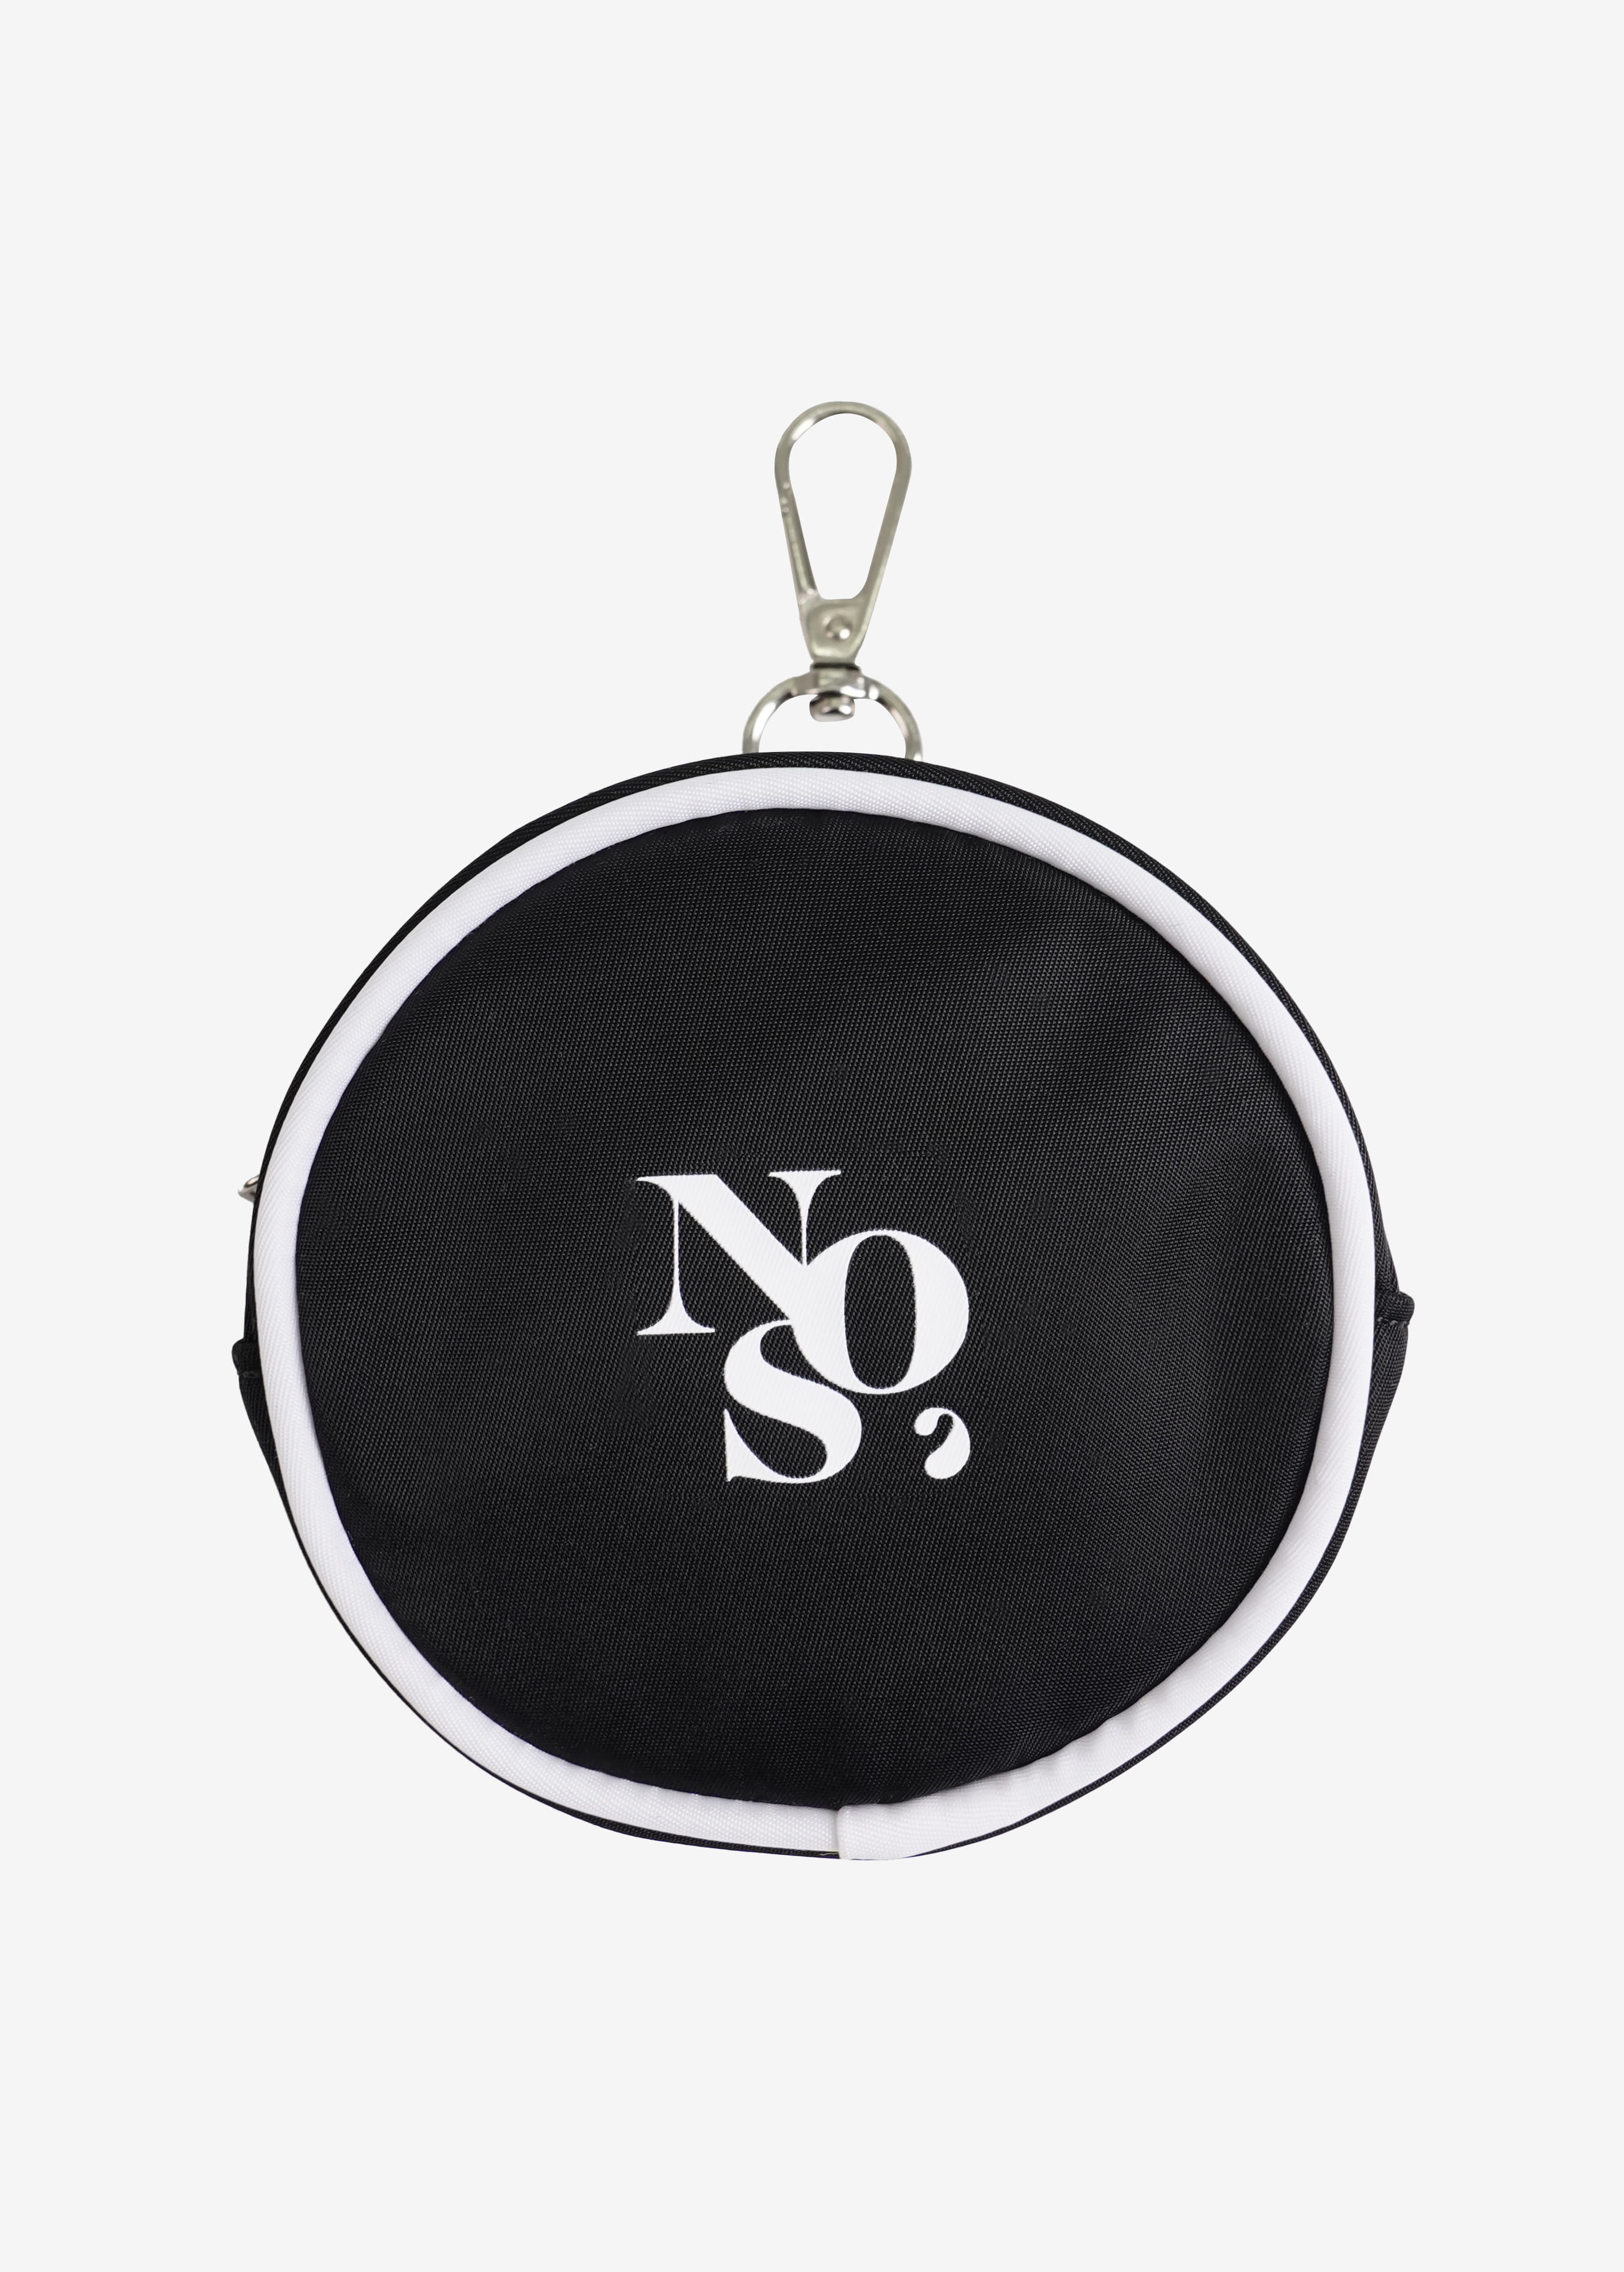 NOS7 Logo Pouch Keyring - Black